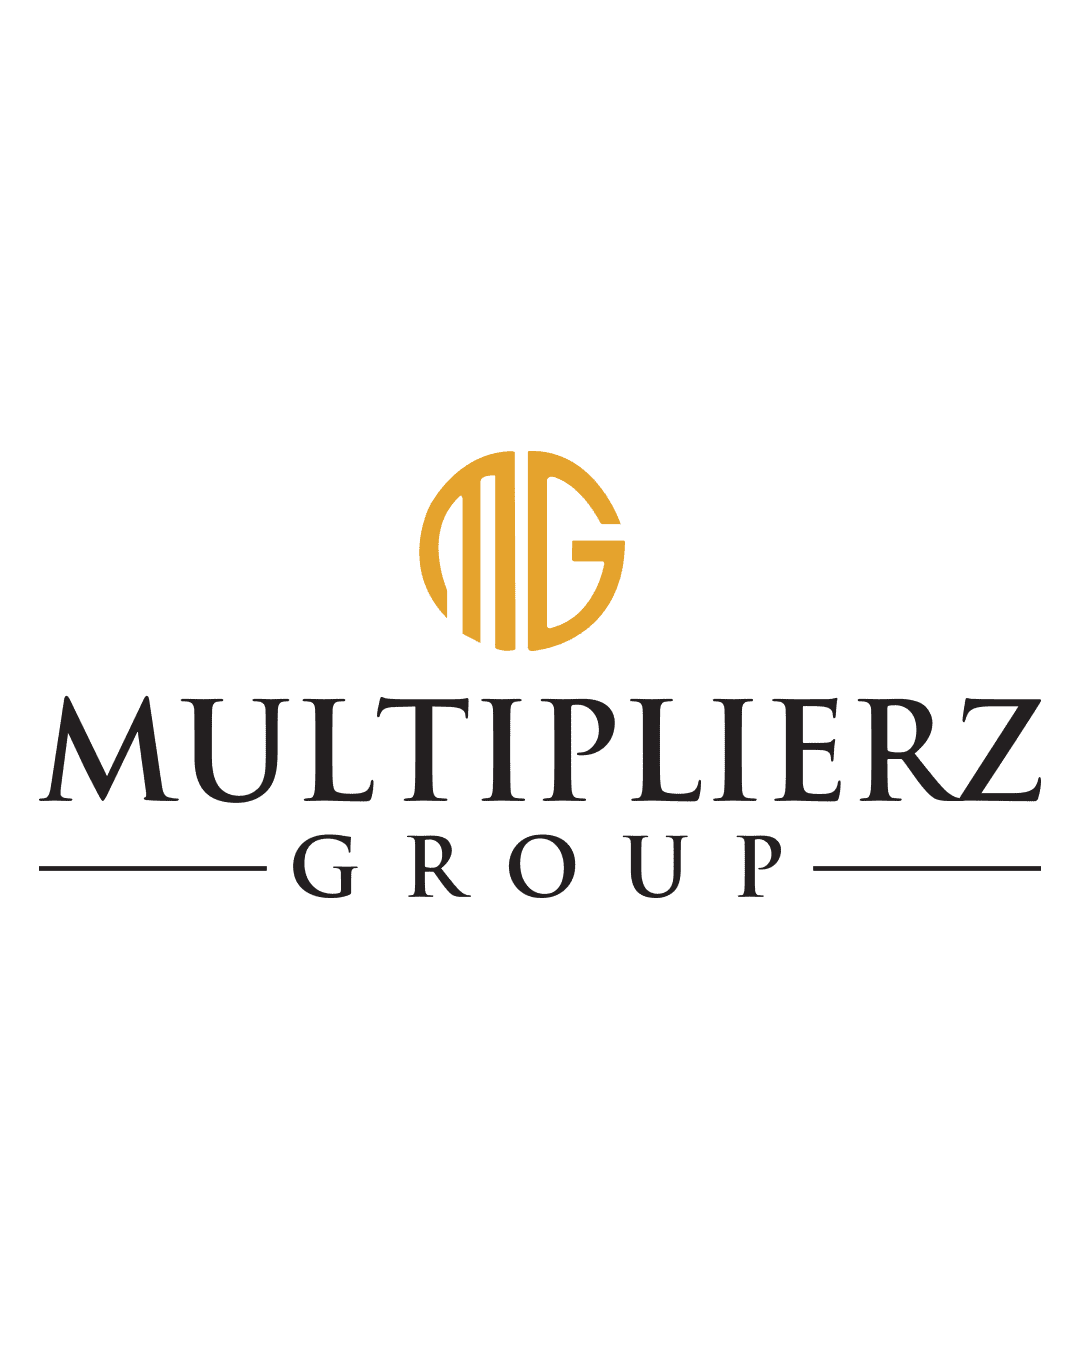 Multiplierz Group